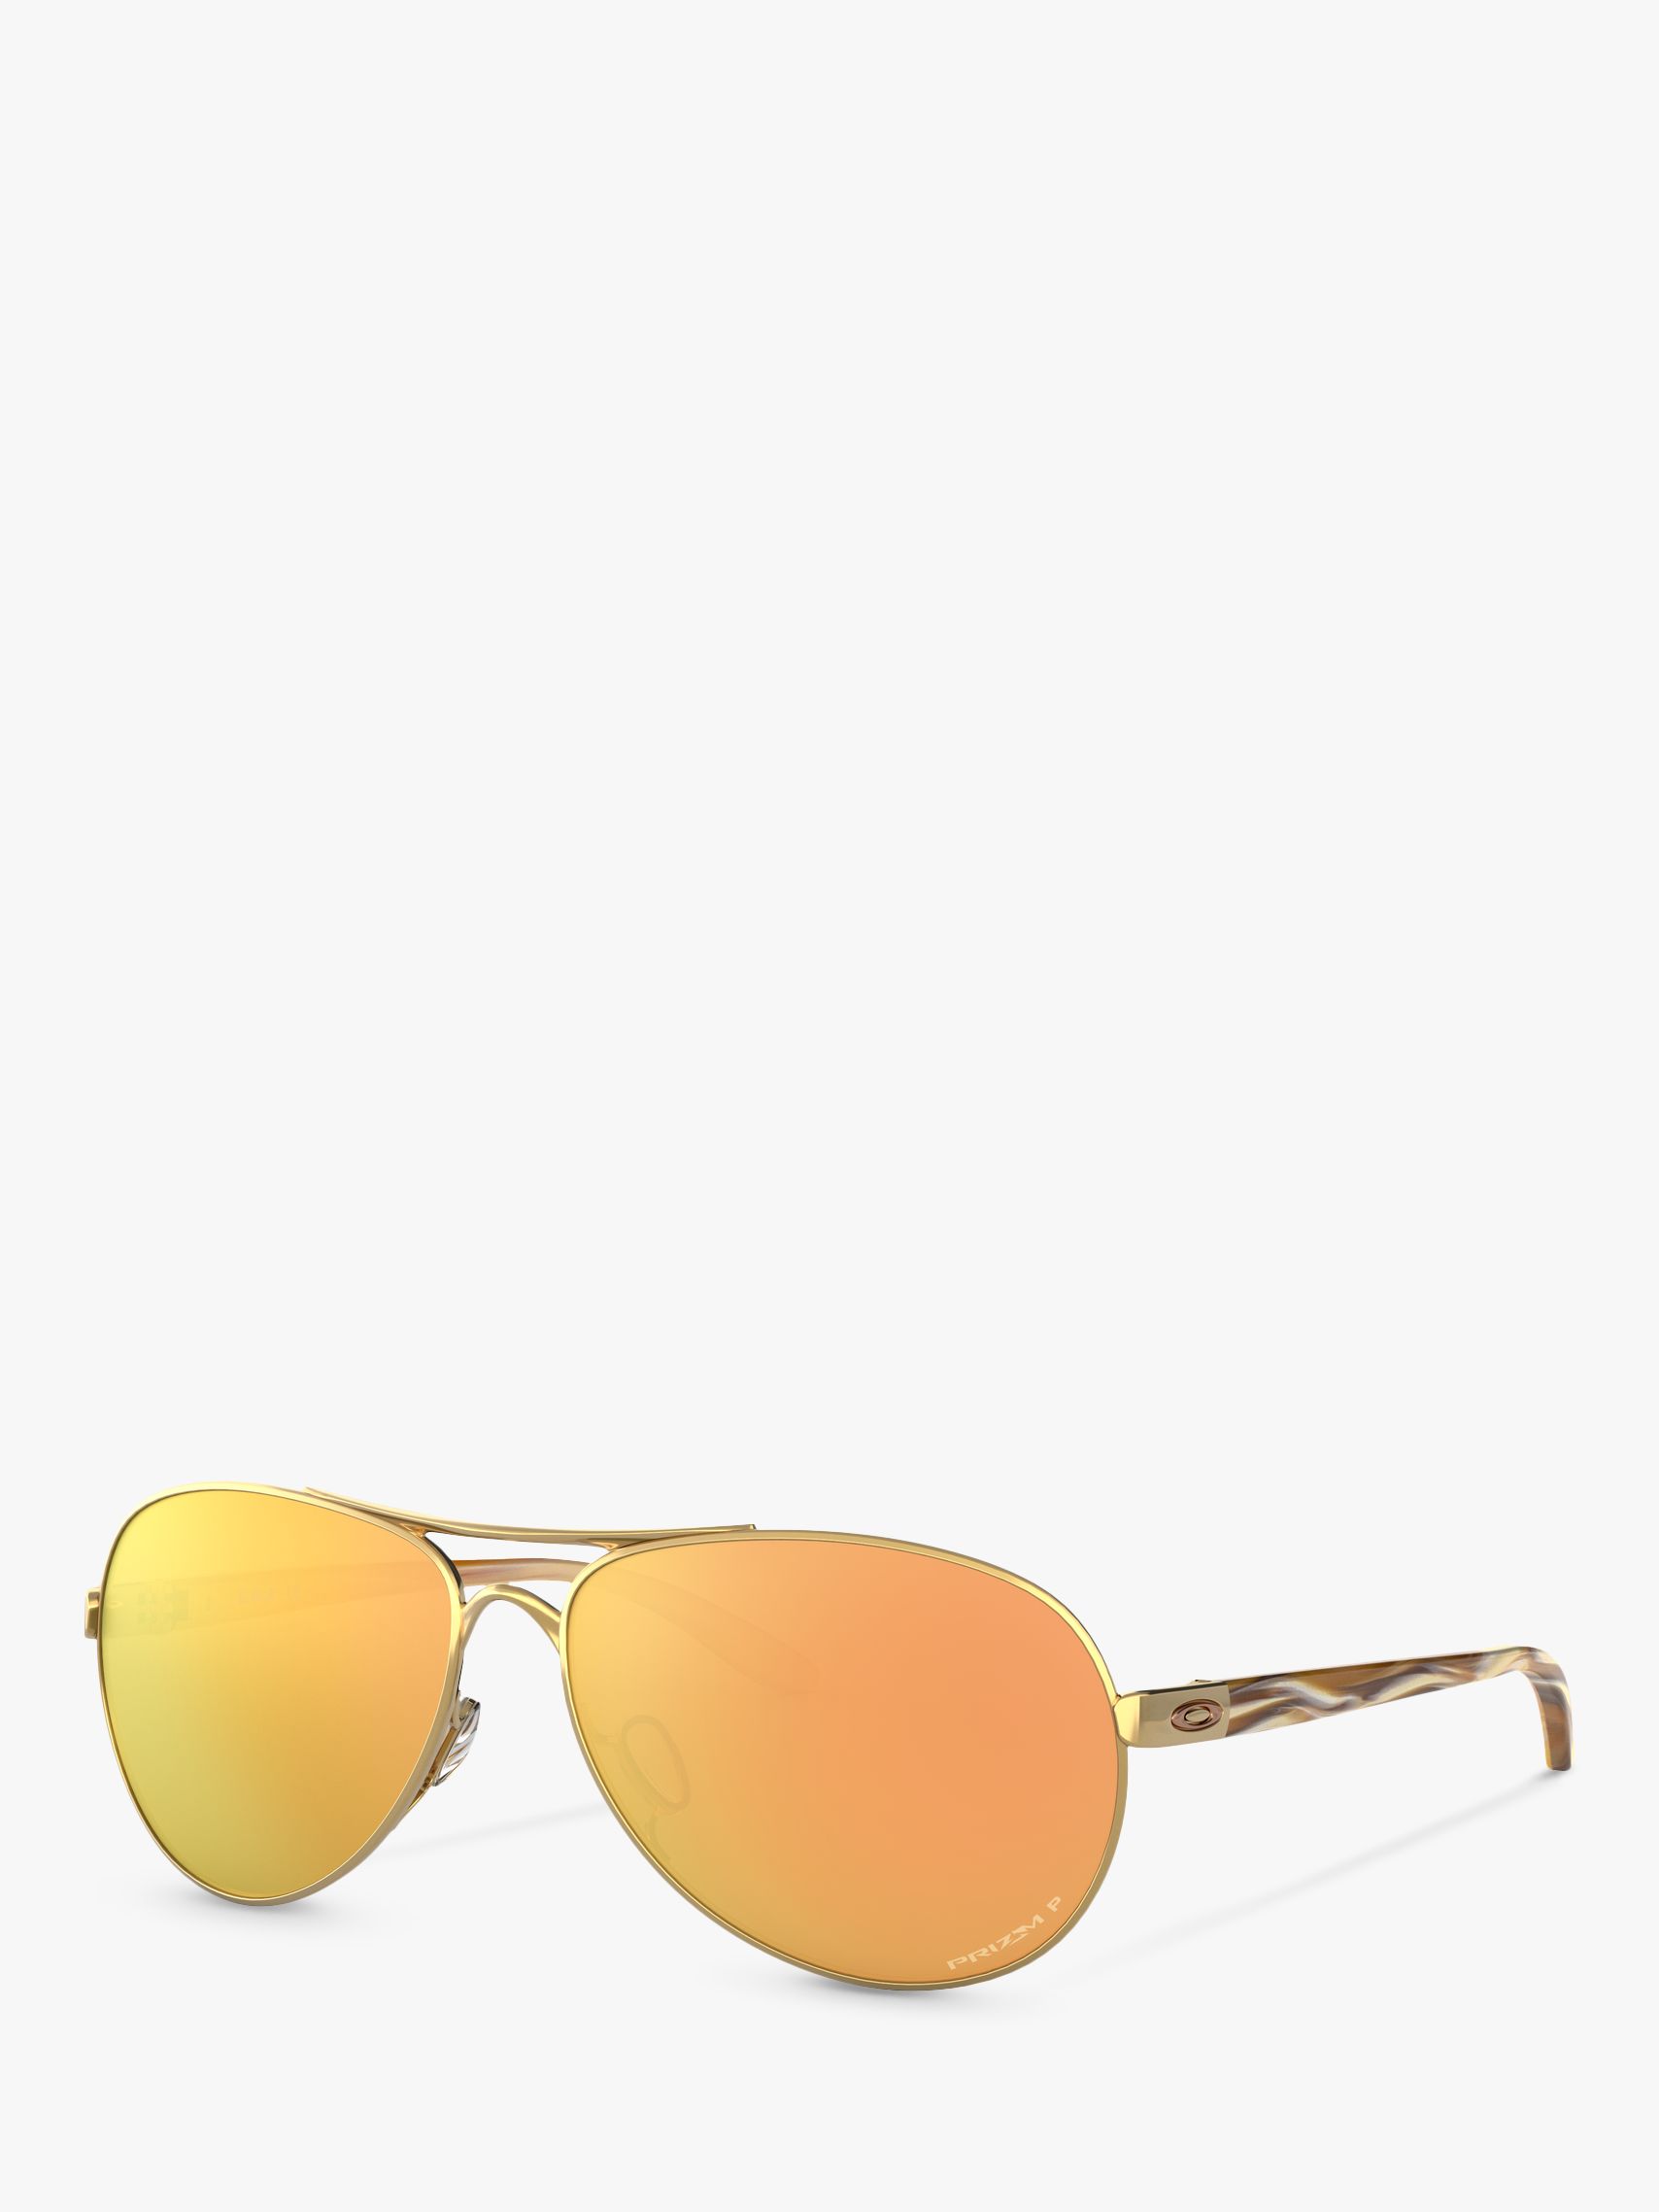 ladies oakley aviator sunglasses